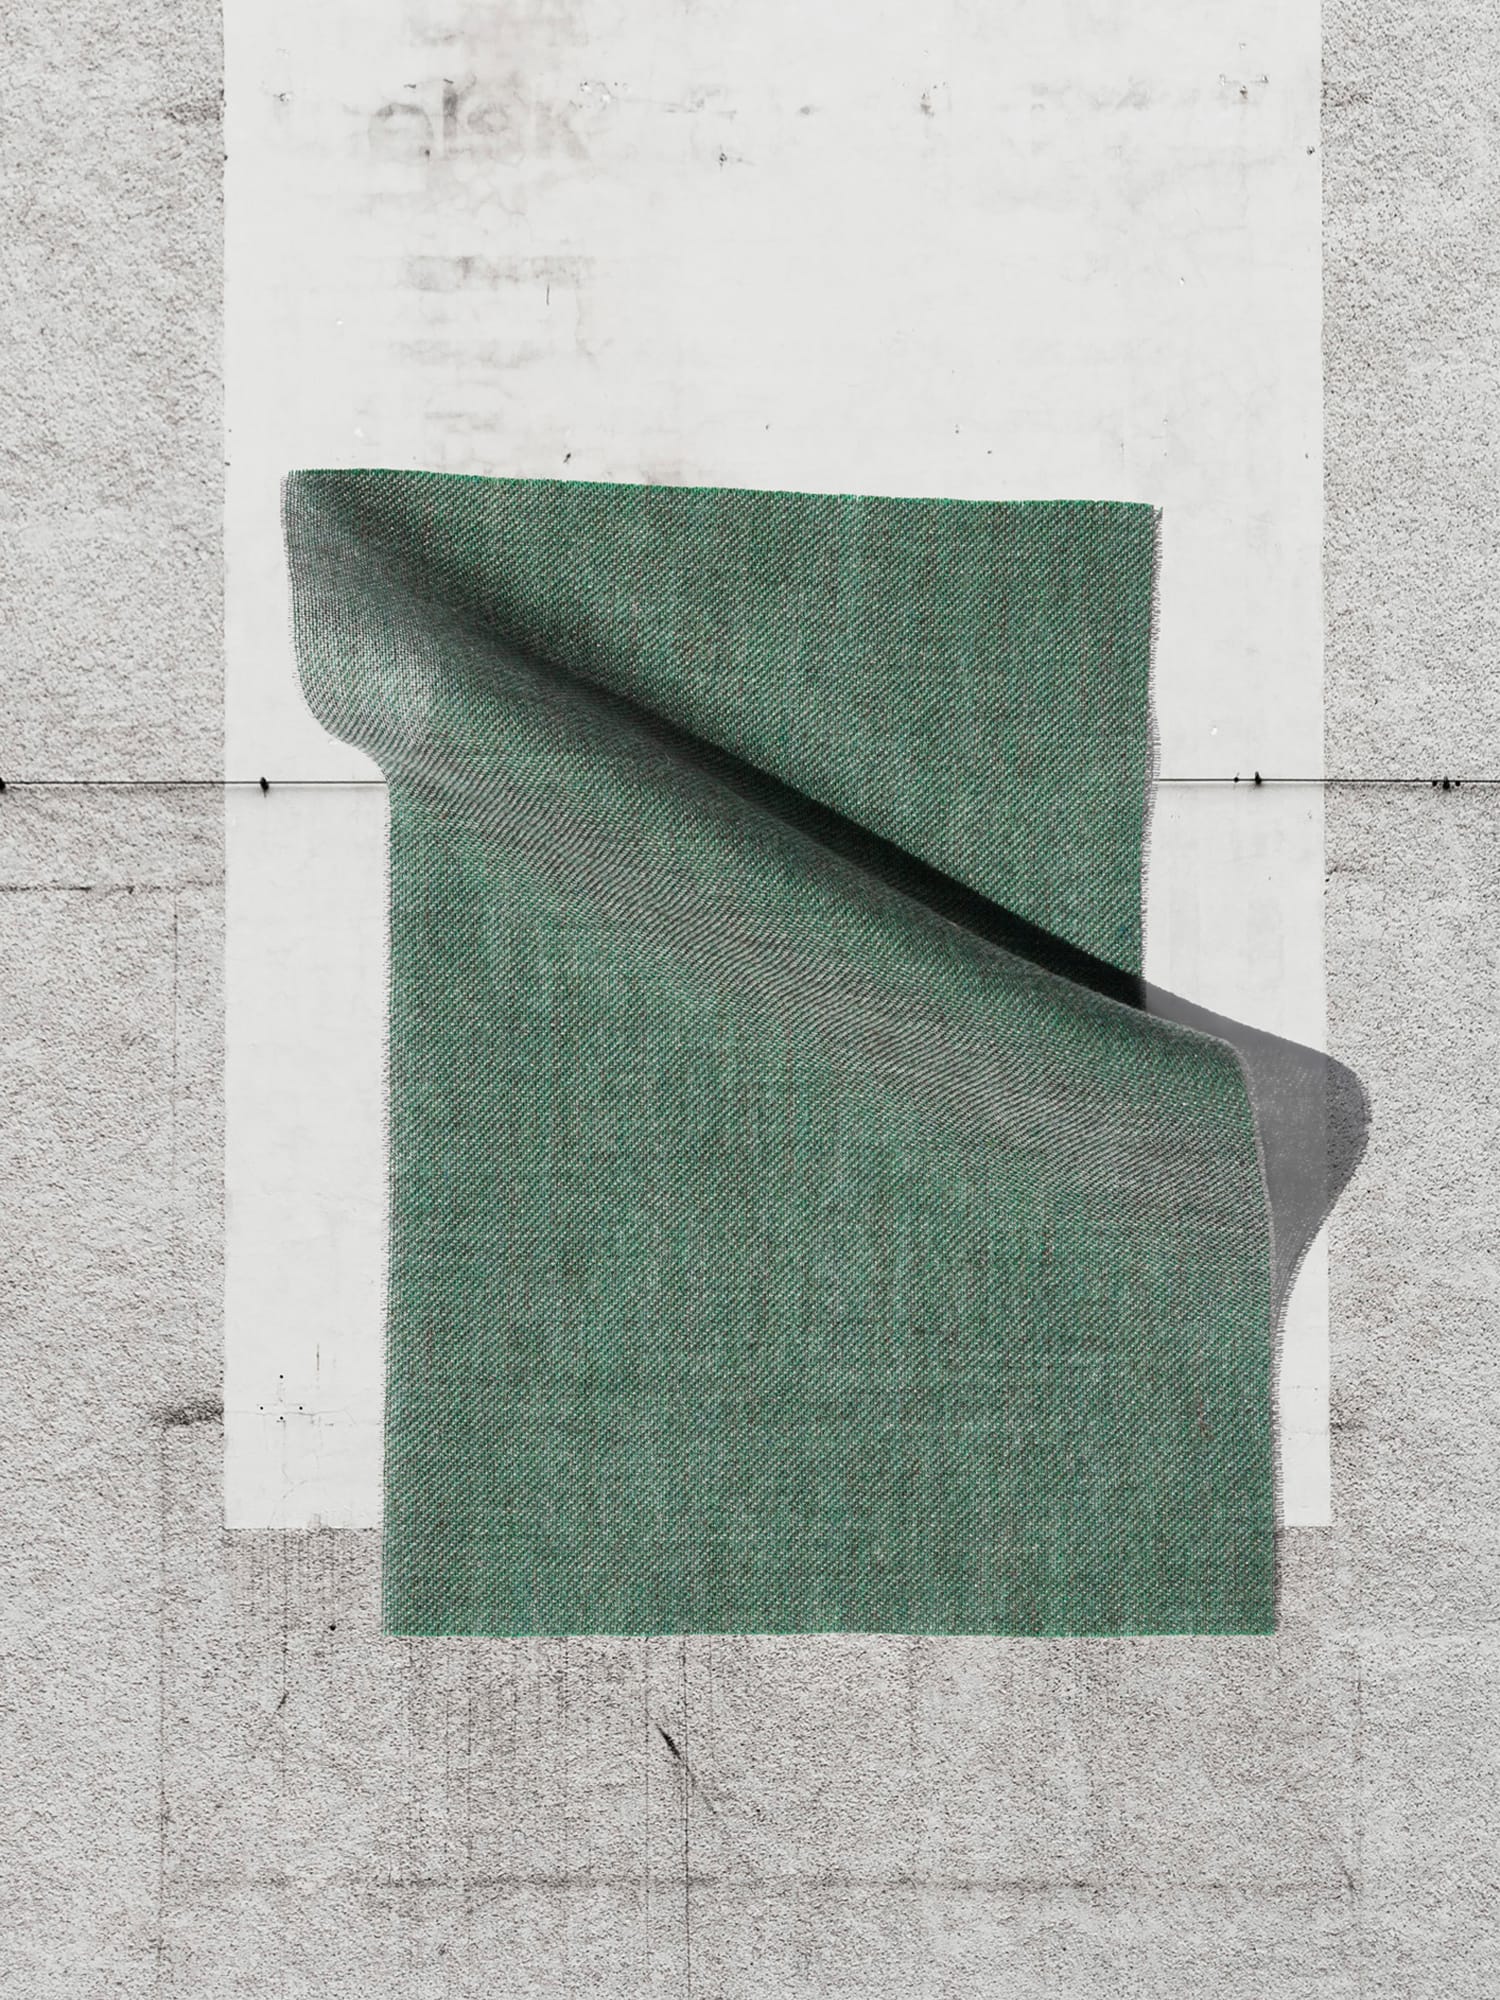 Draped green fabric sample on concrete floor